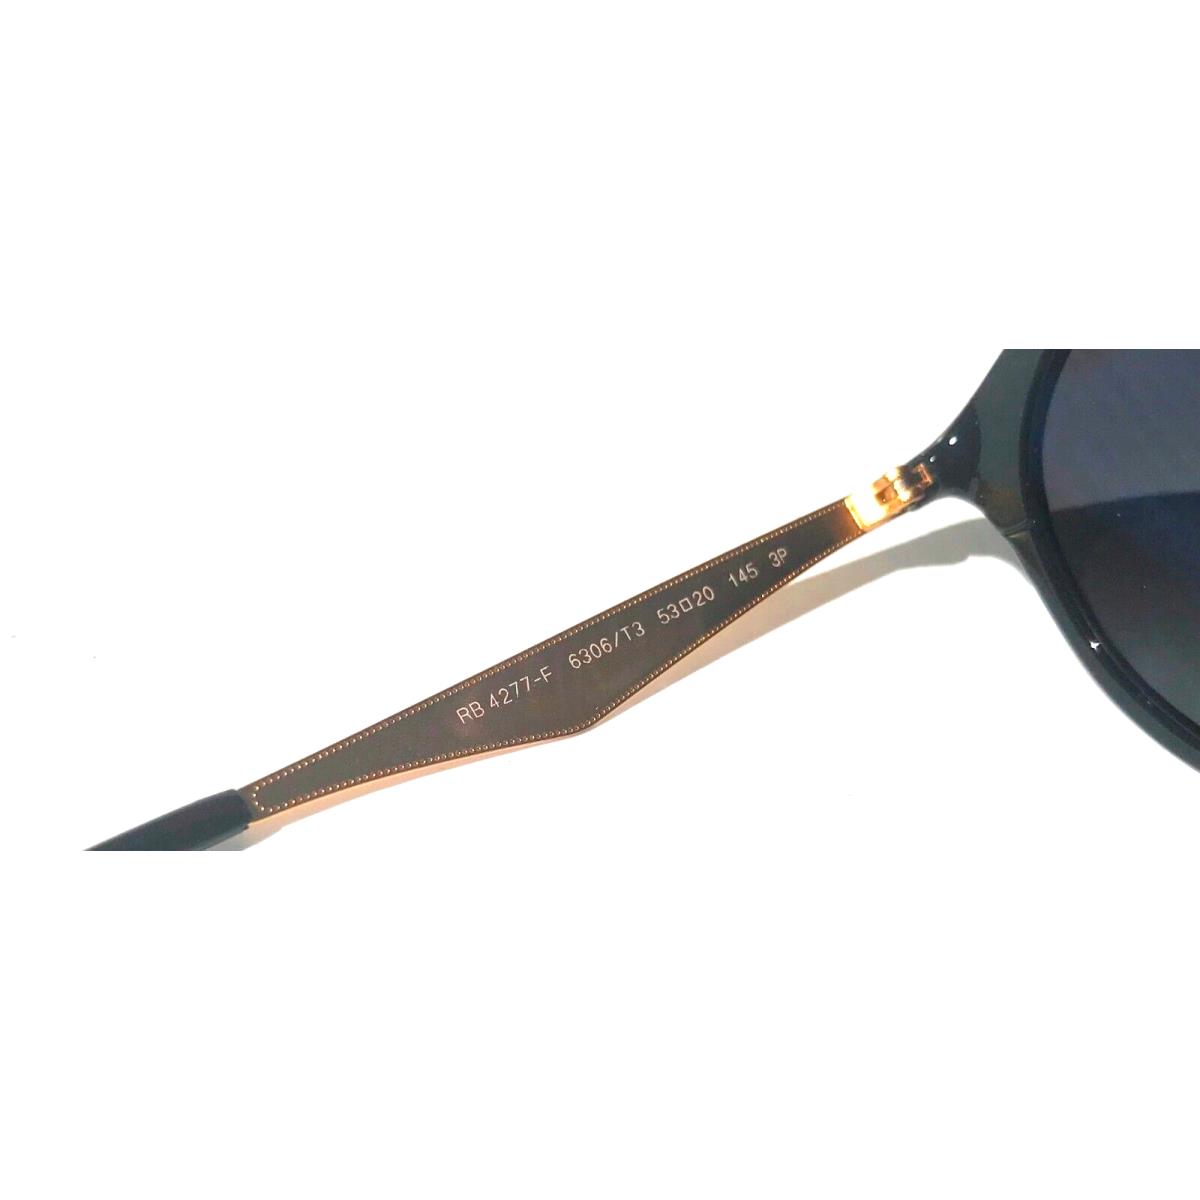 Ray-Ban sunglasses Emma - Frame: Black and Gold, Lens: Grey 10